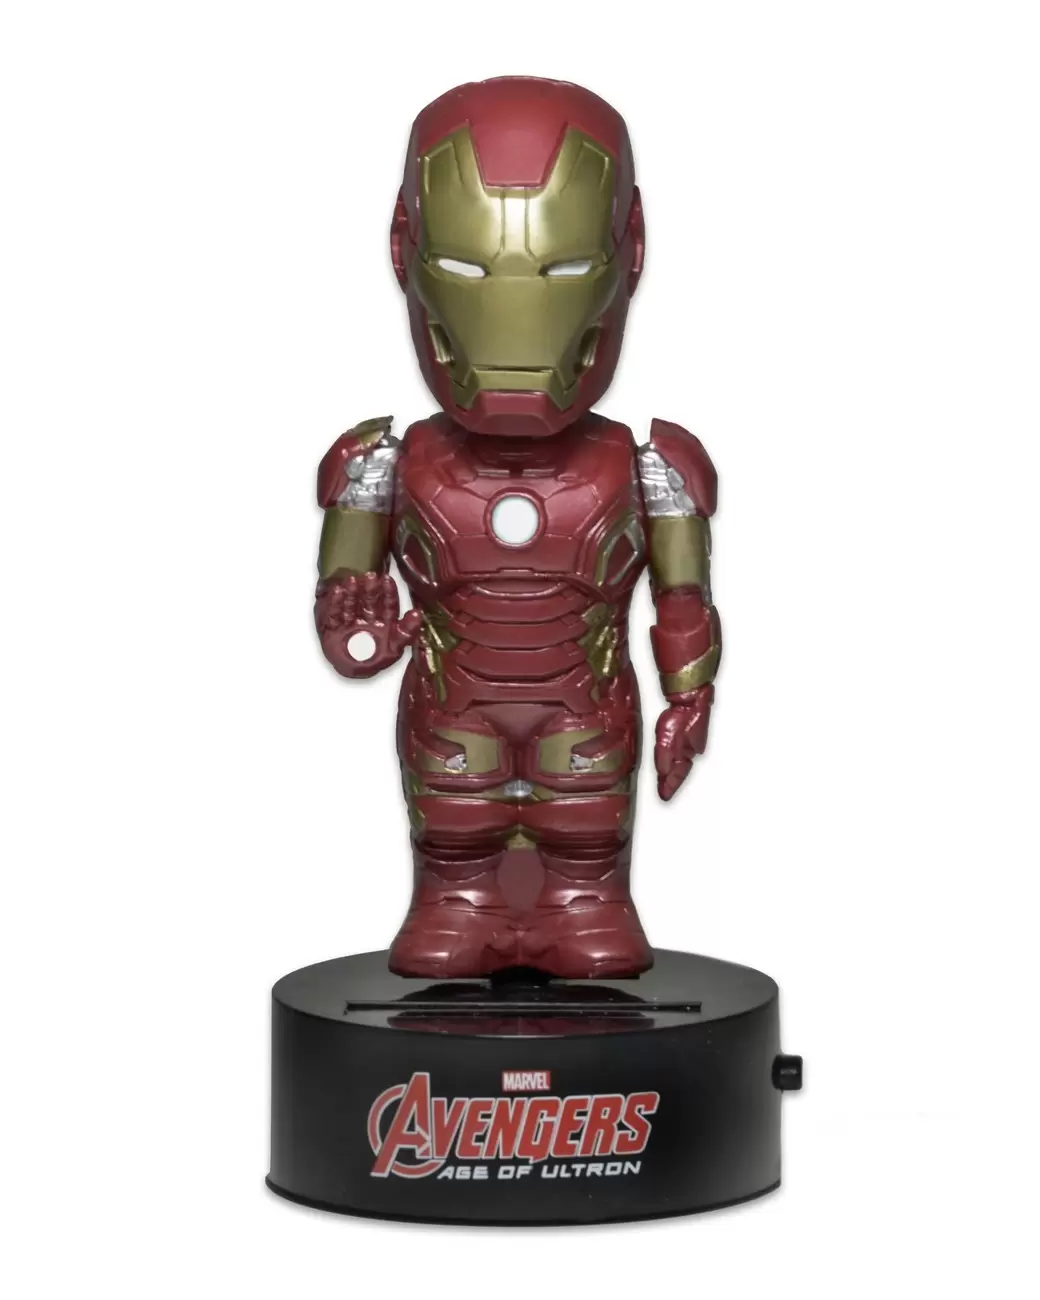 Avengers Age of Ultron - Body Knocker Iron Man - NECA action figure